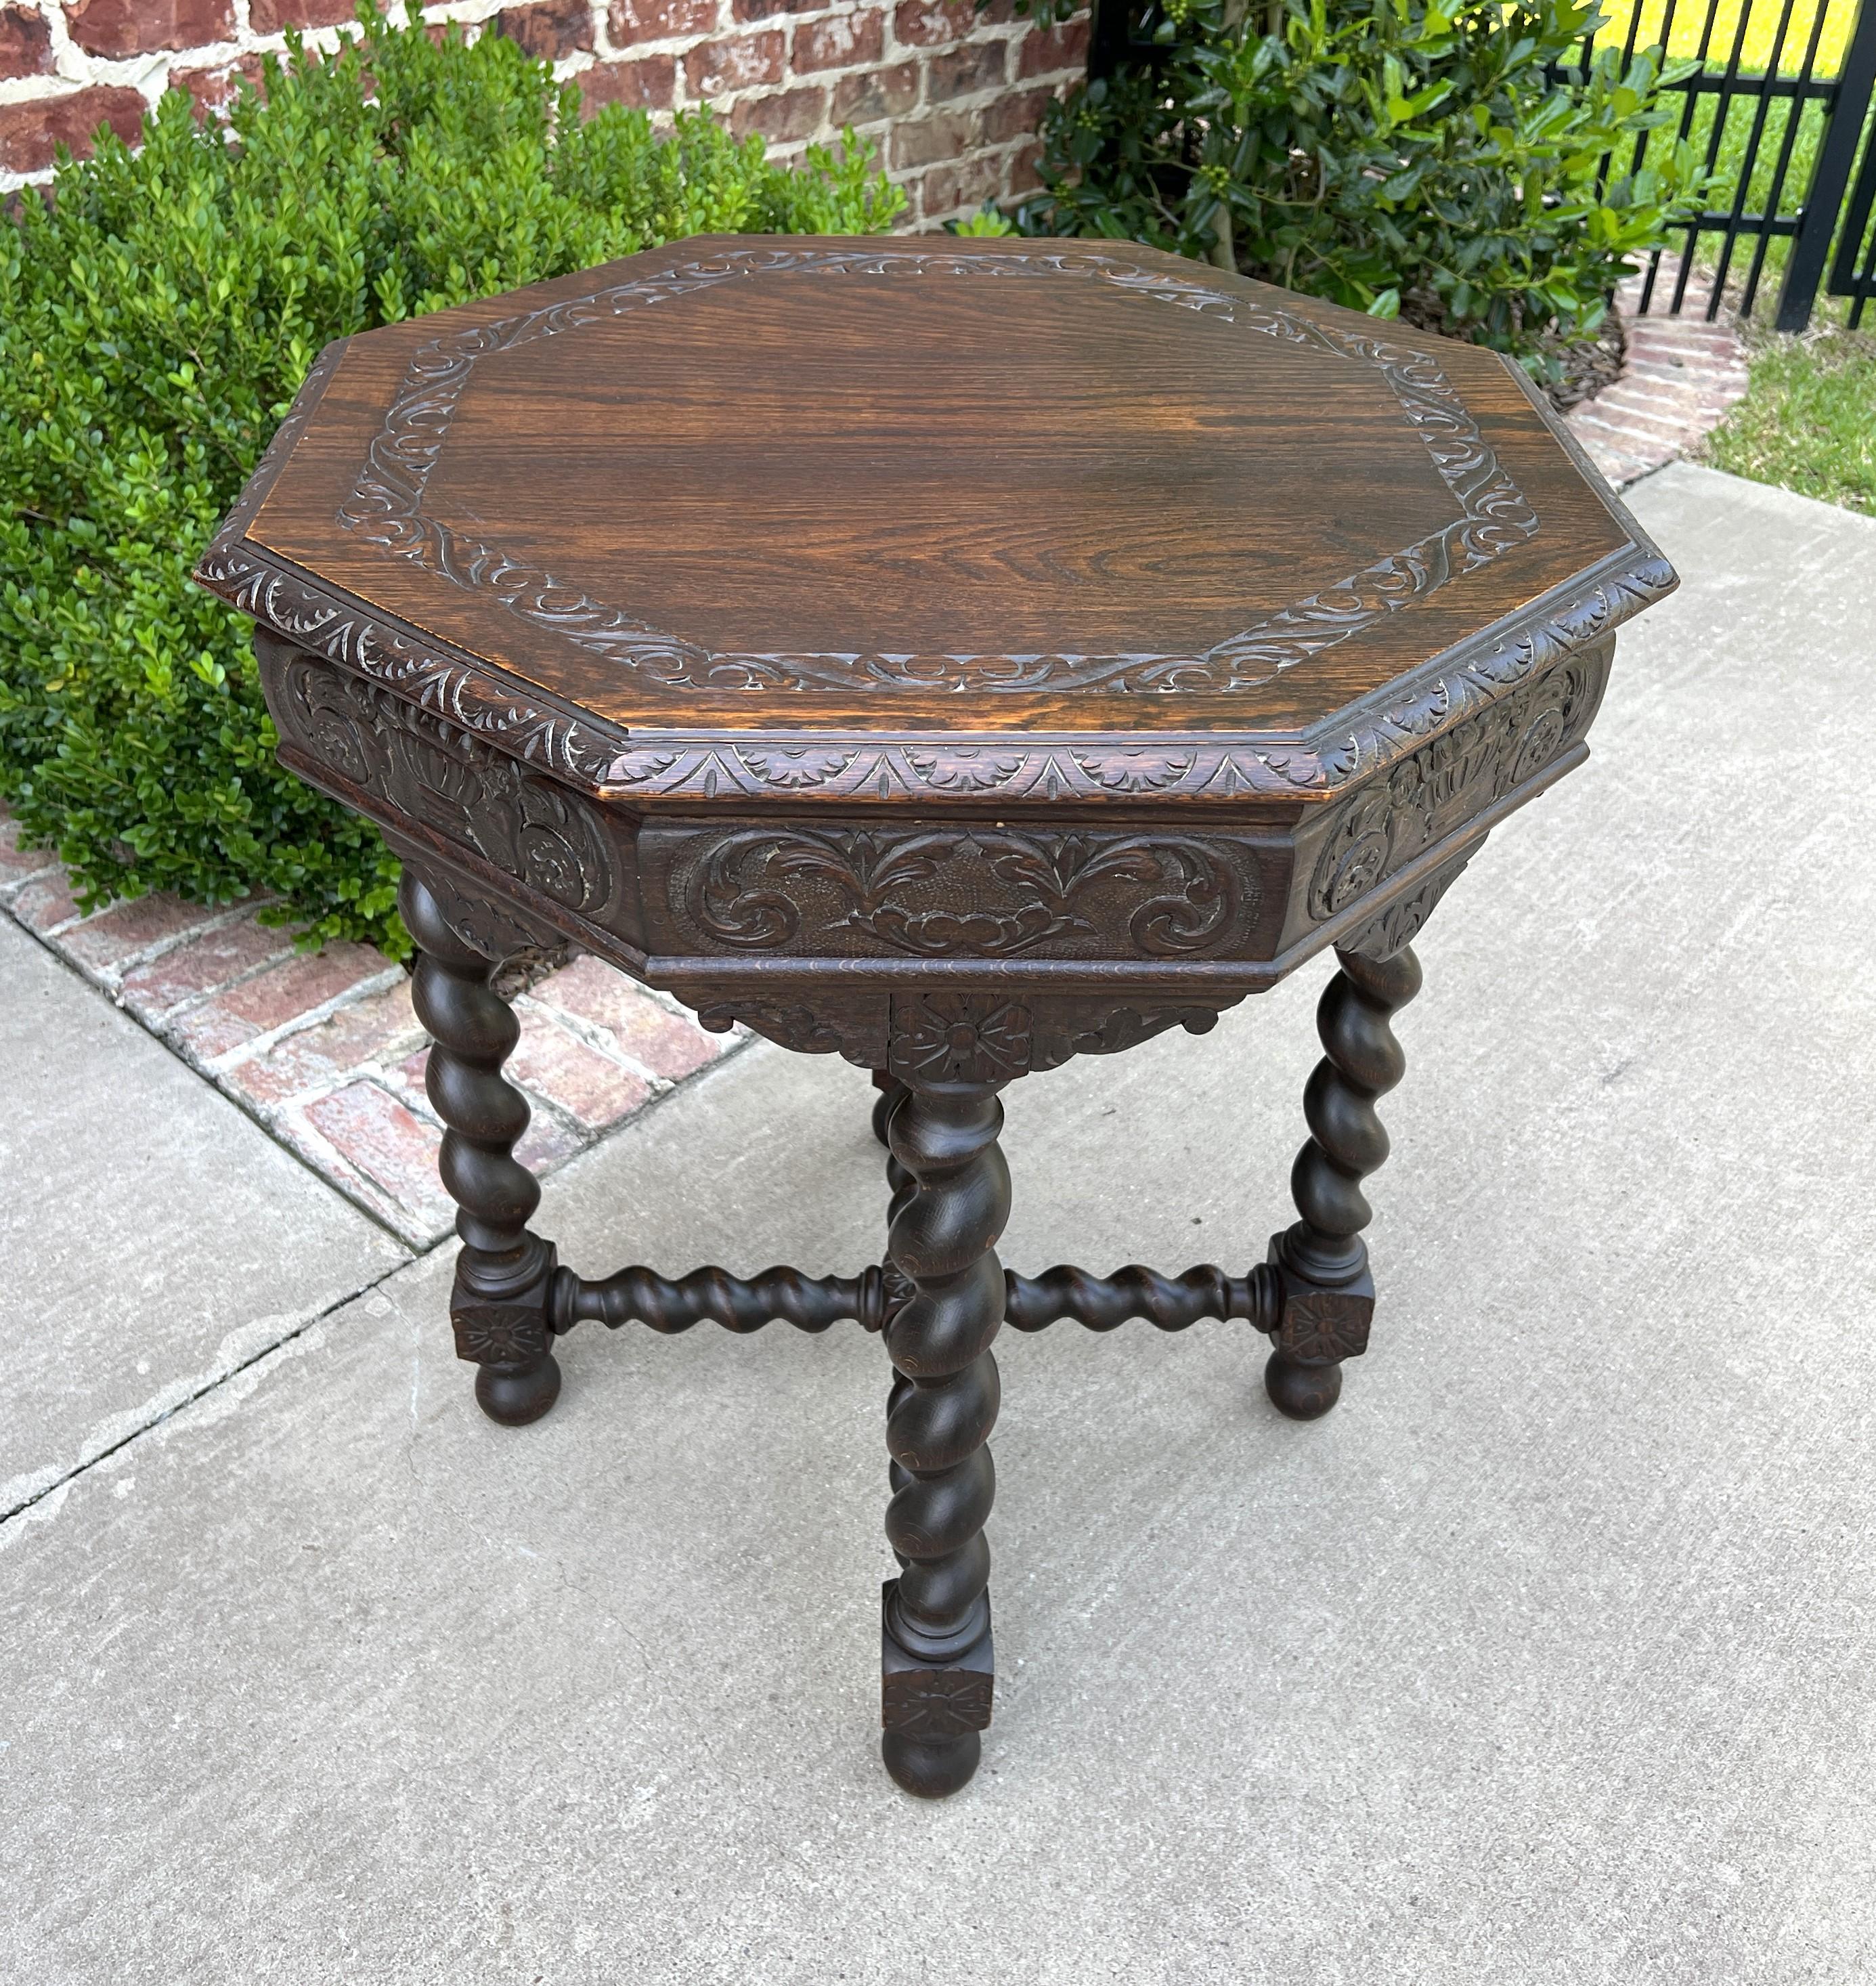 Antique French Table Barley Twist Octagonal Renaissance Revival Oak Carved 19thc For Sale 12